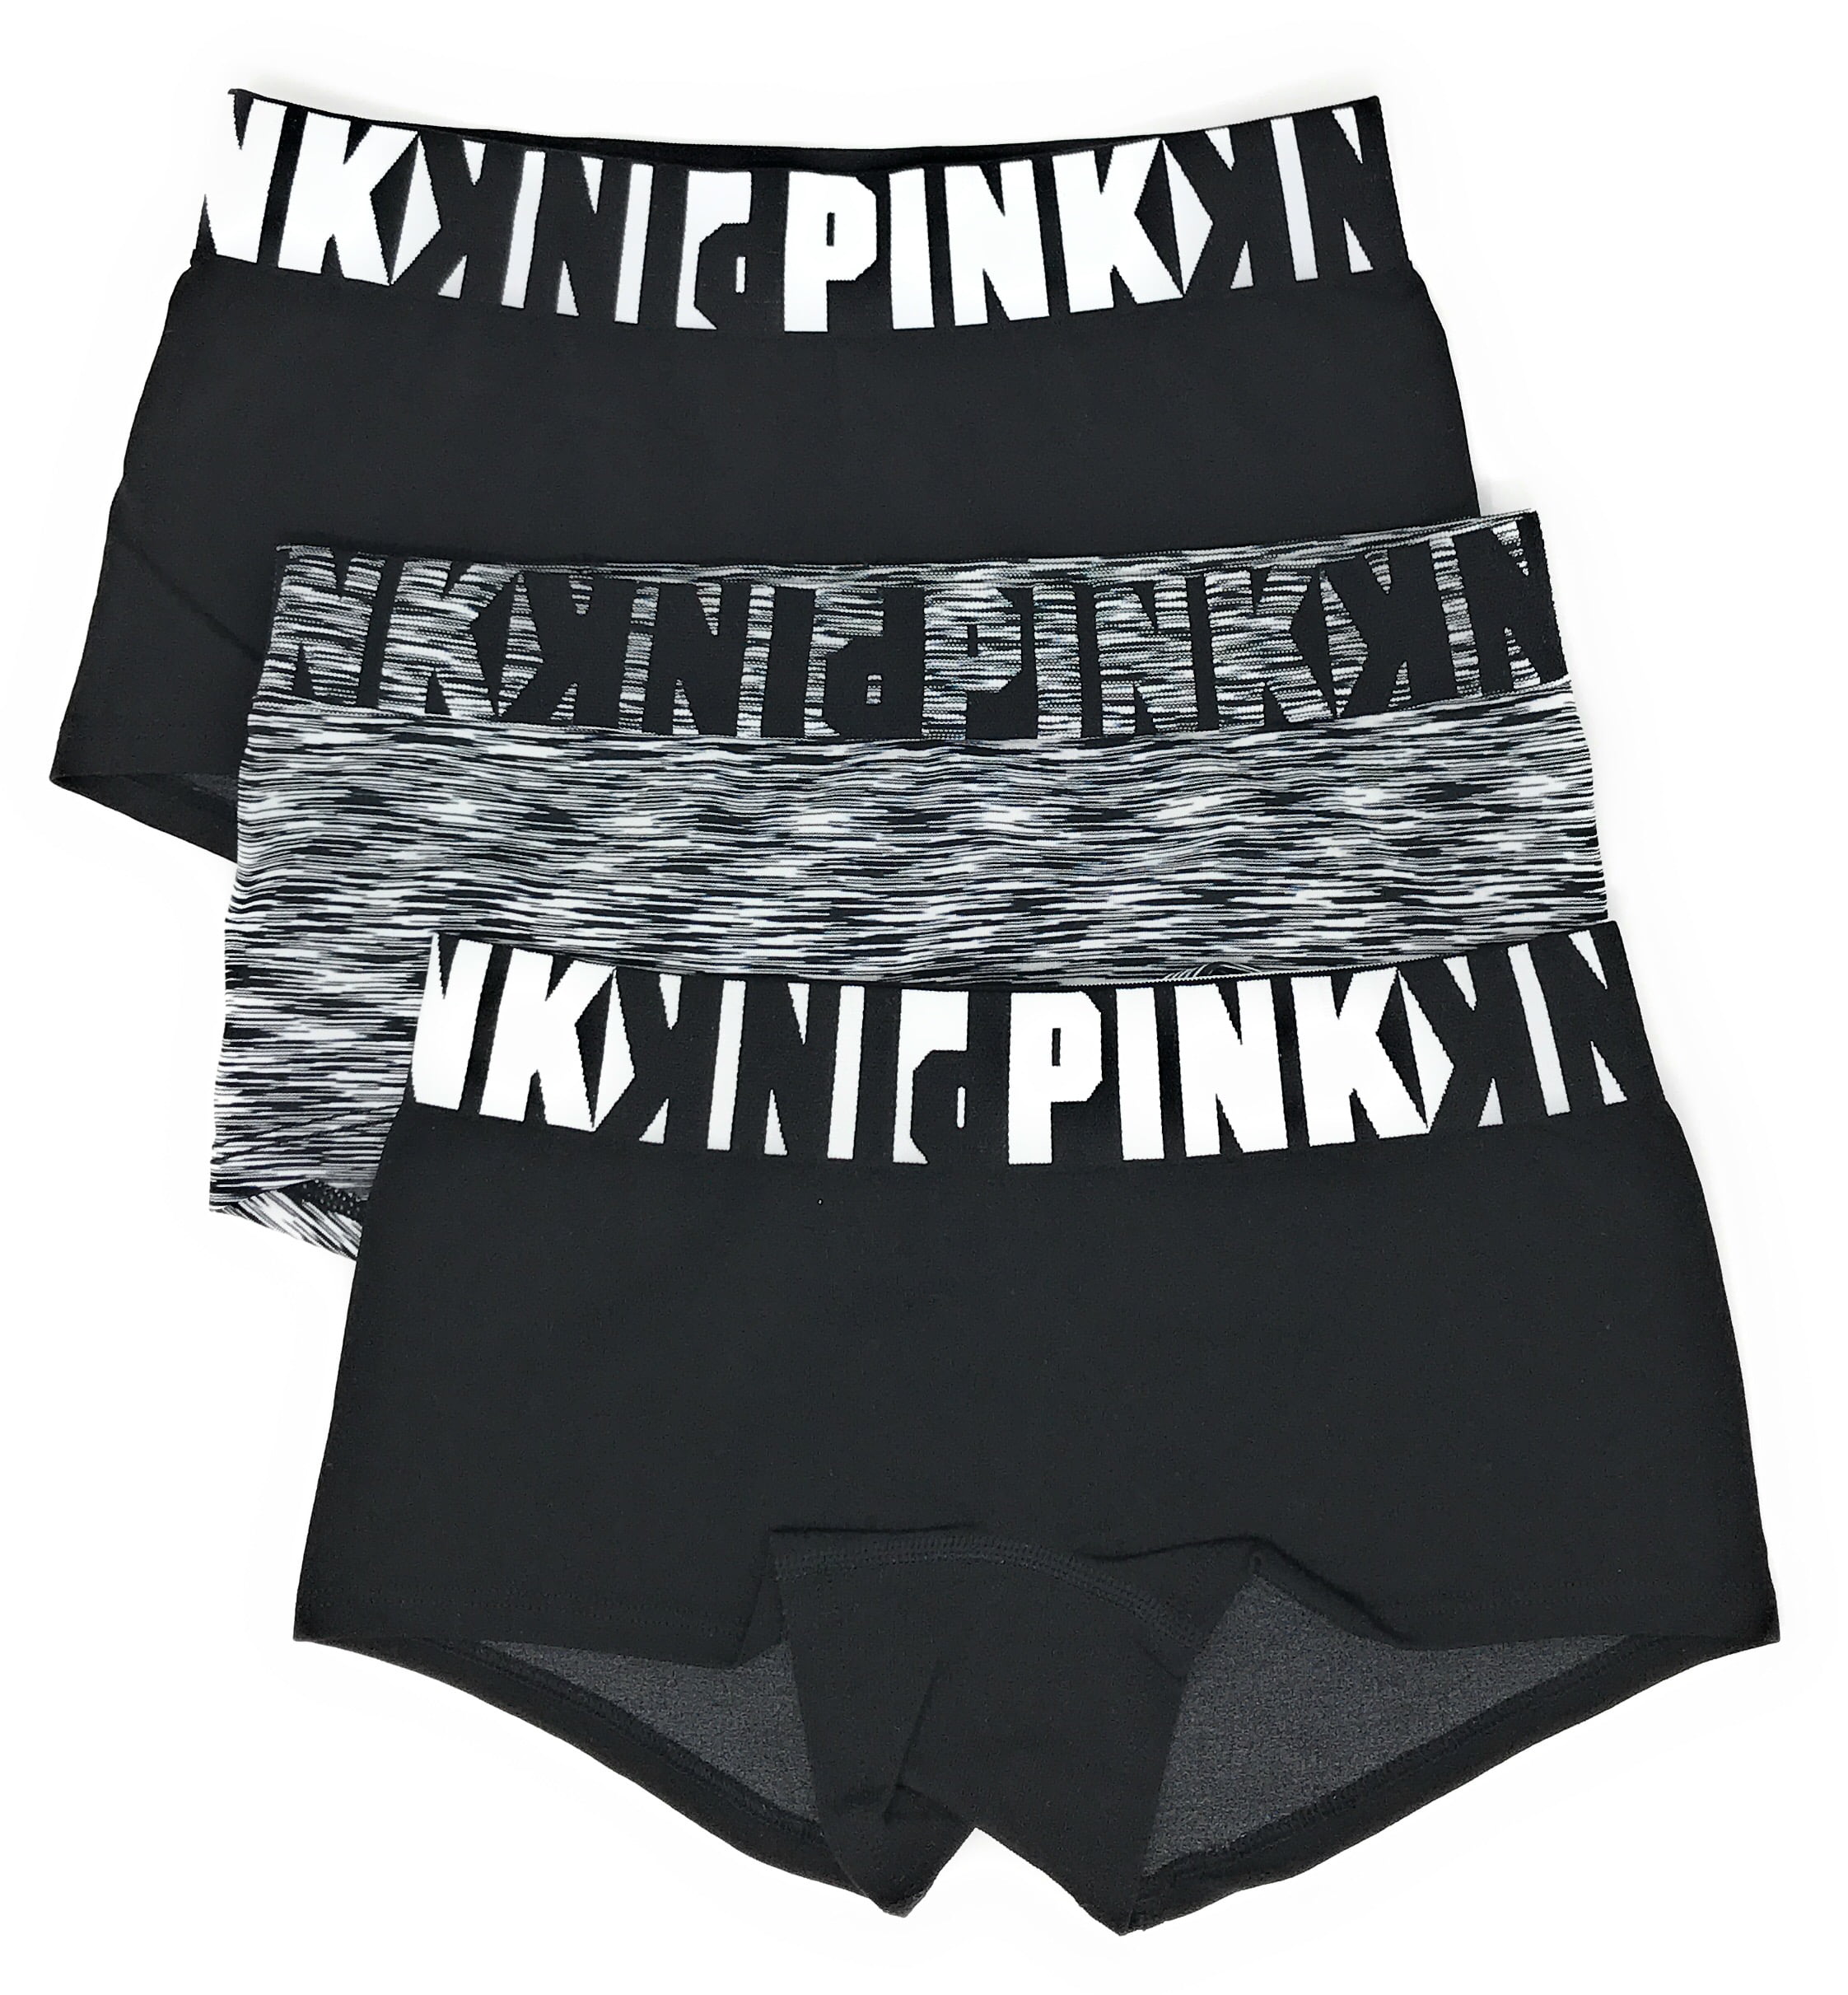 Victoria's Secret PINK Boyshort Panty Set of 3 